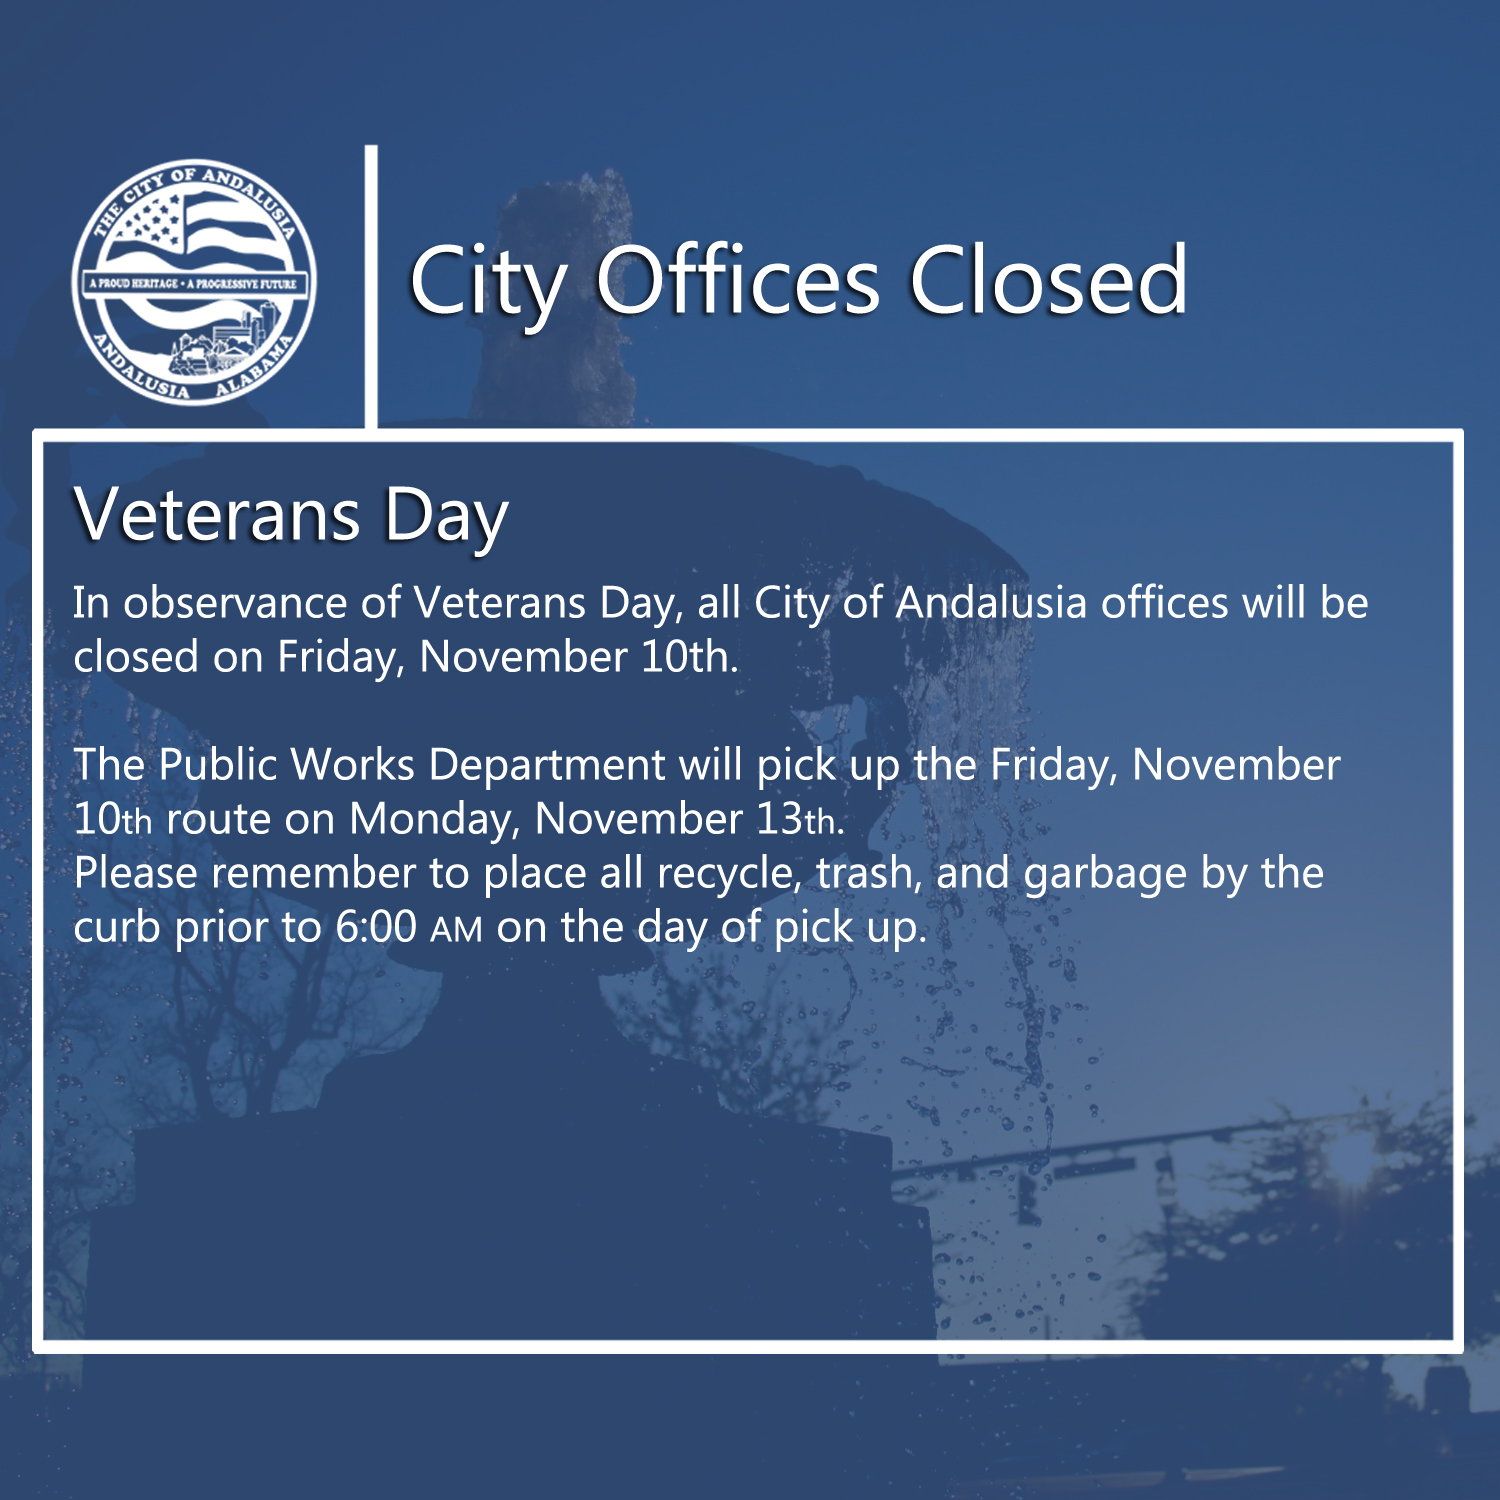 Facebook City Offices Closed Nov10